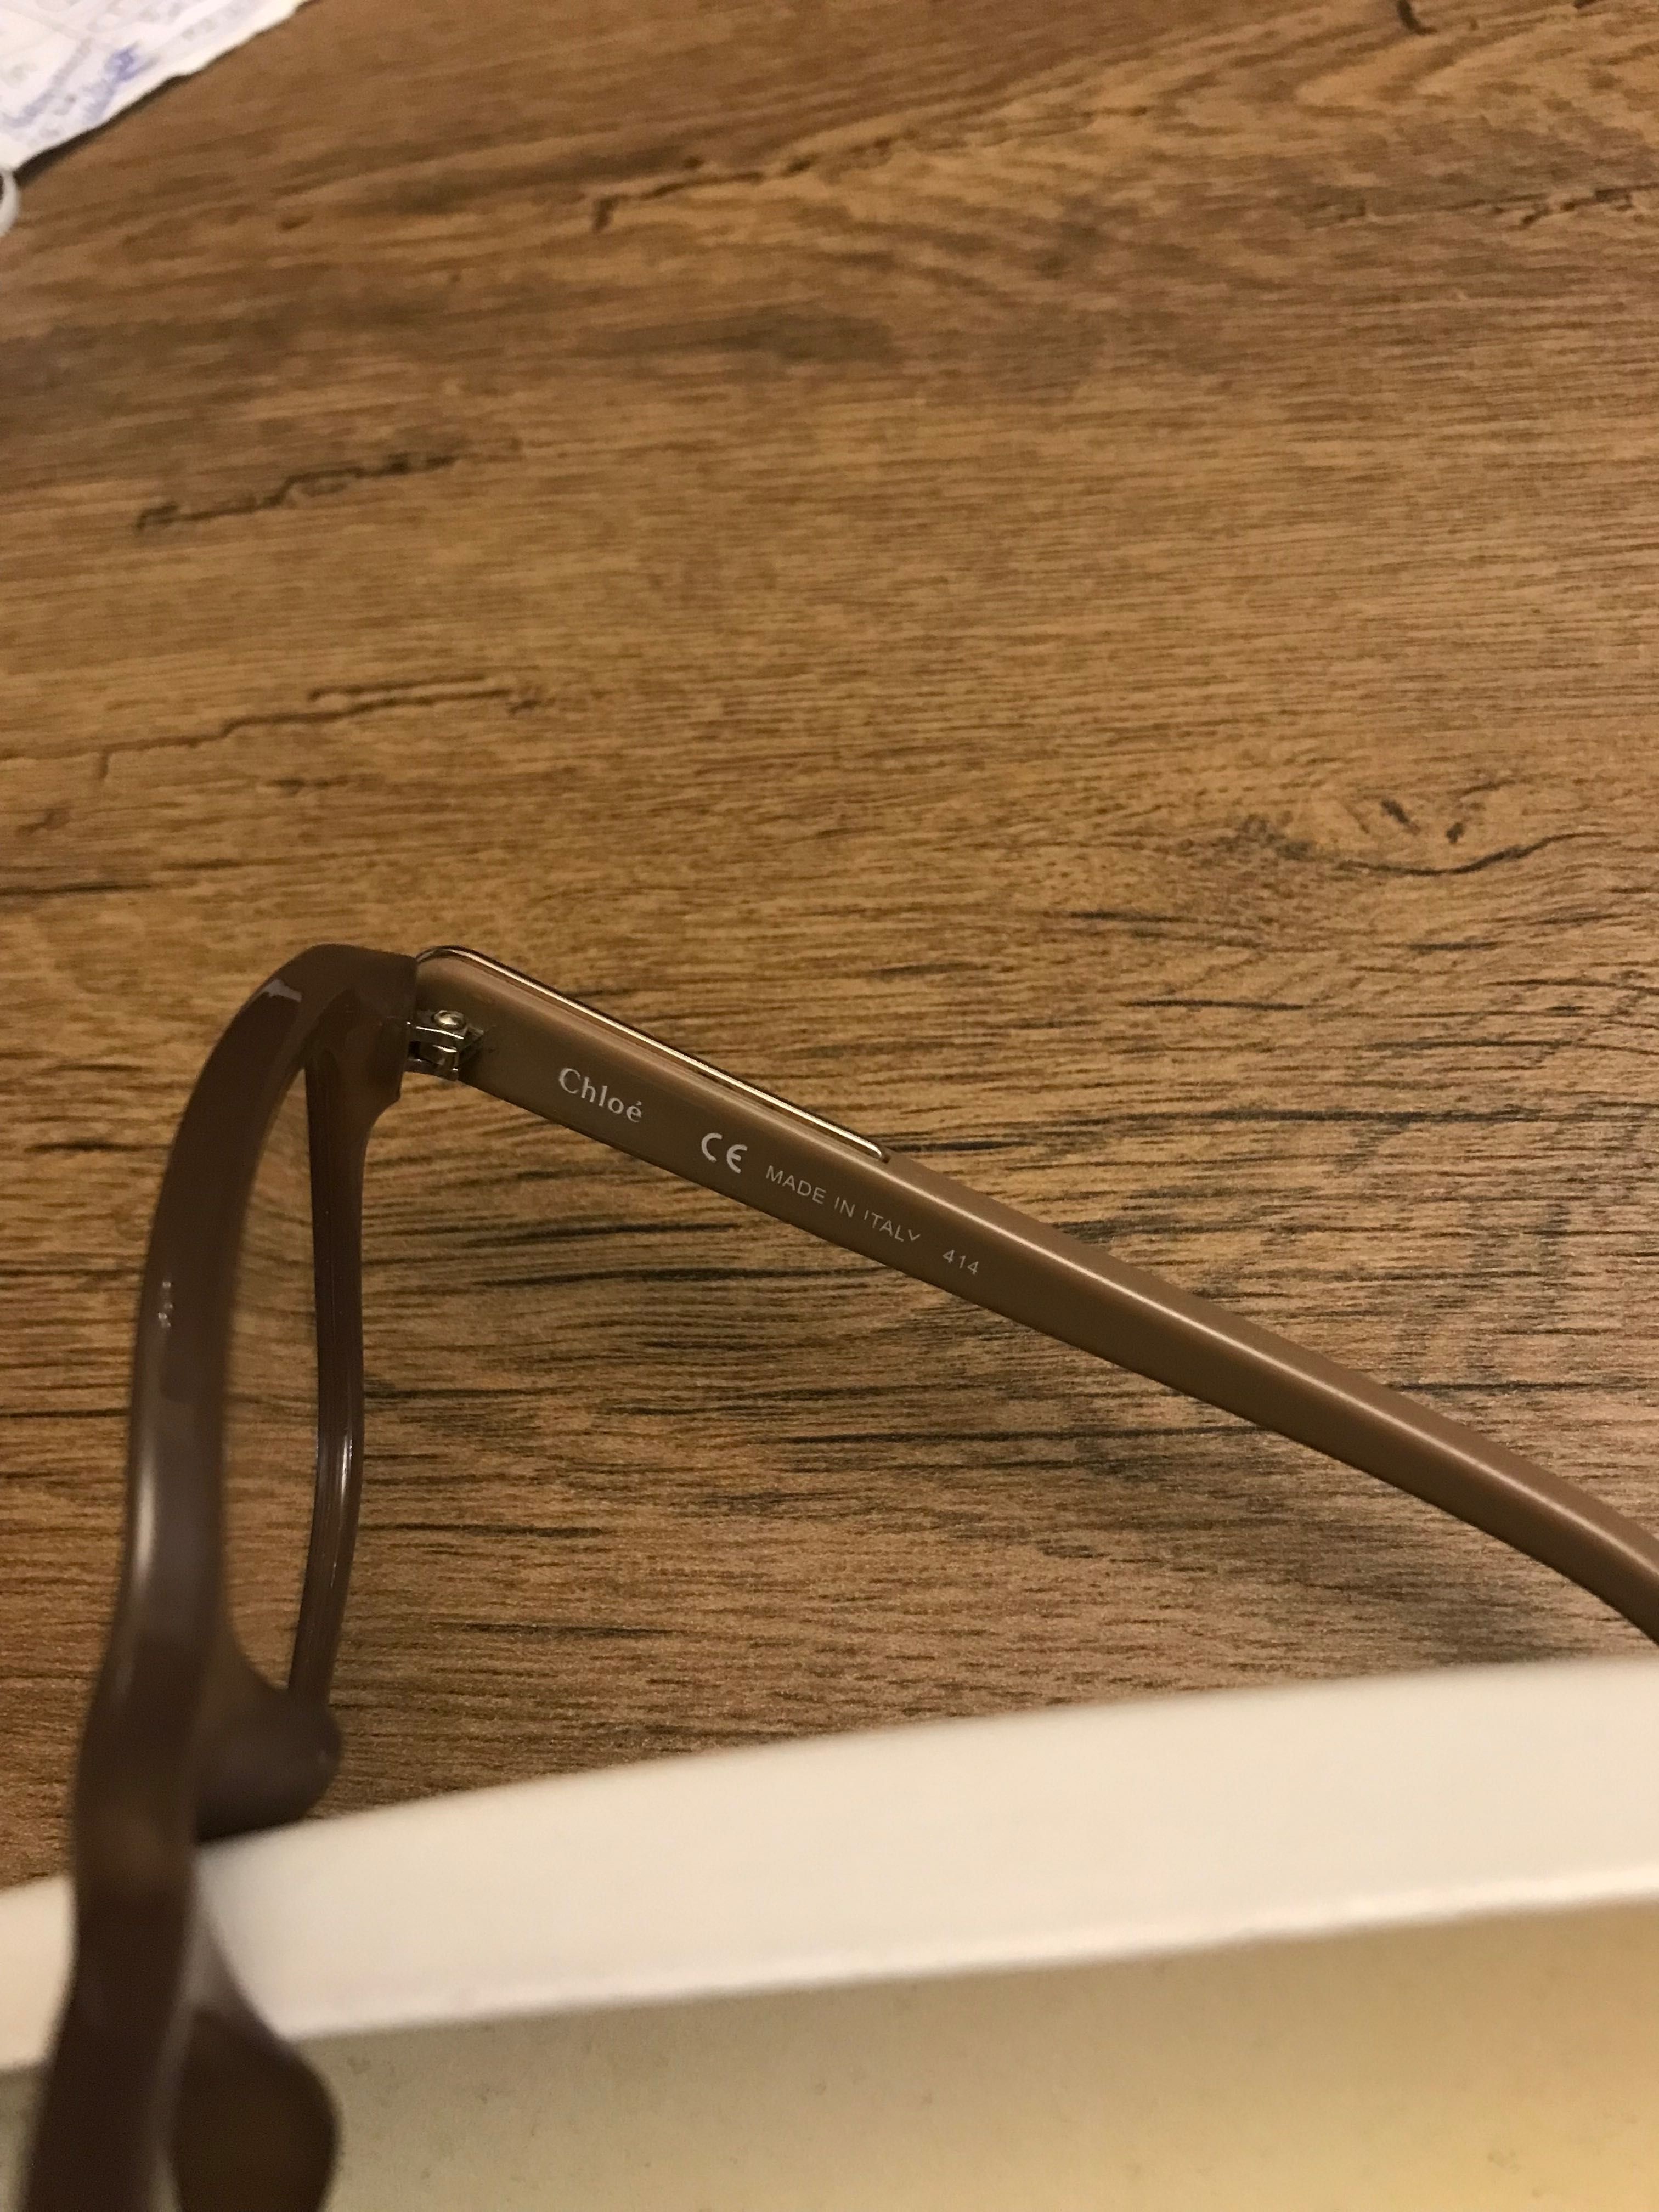 Рамки за очила Chloe